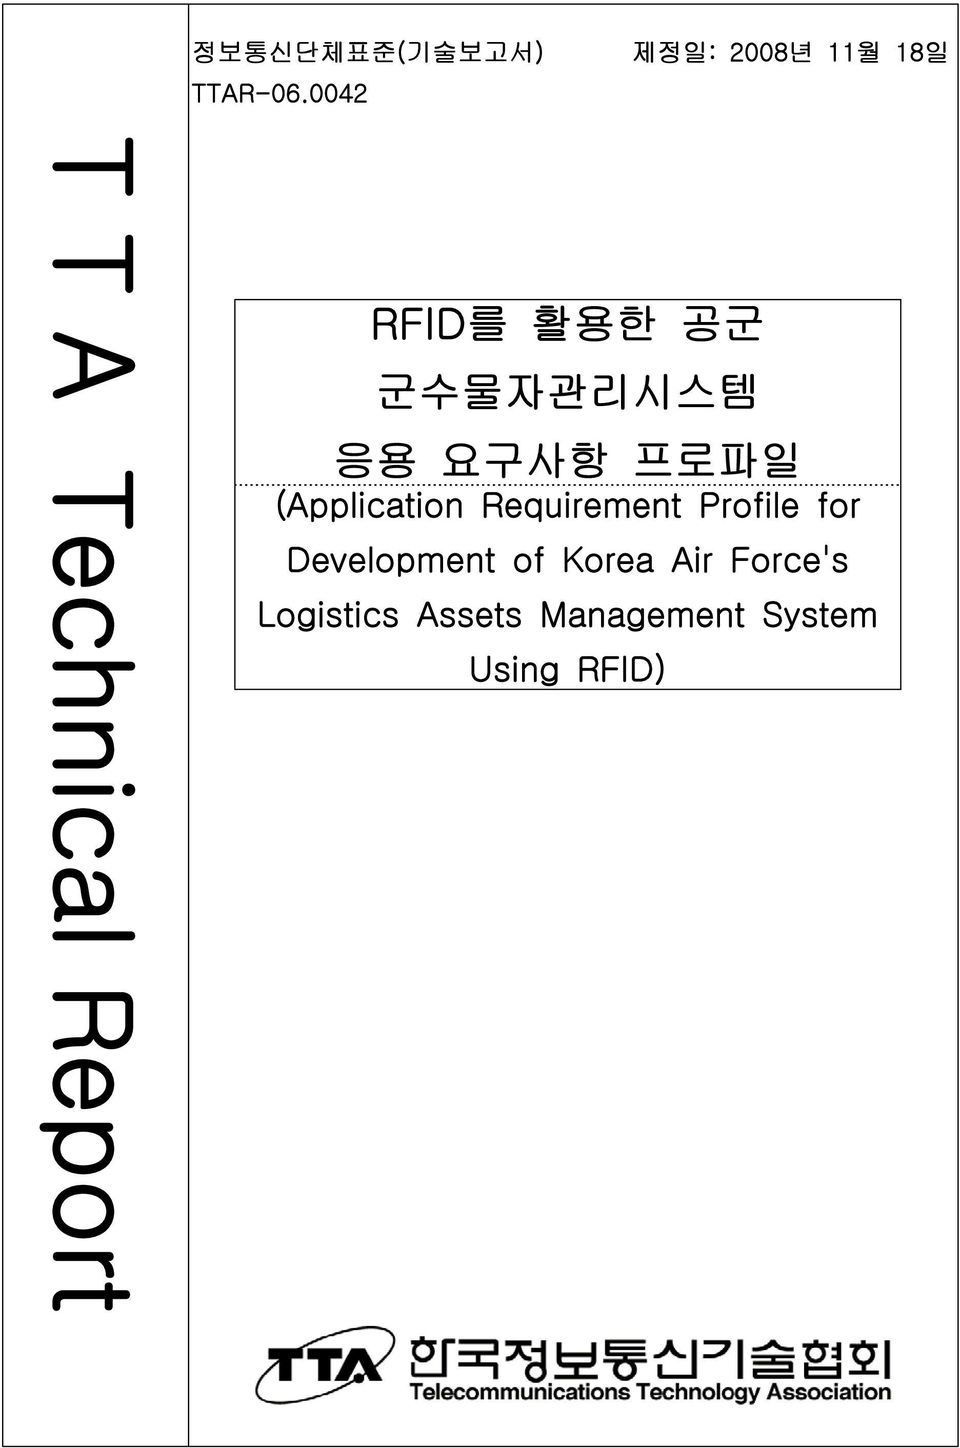 Requirement Profile for Development of Korea Air